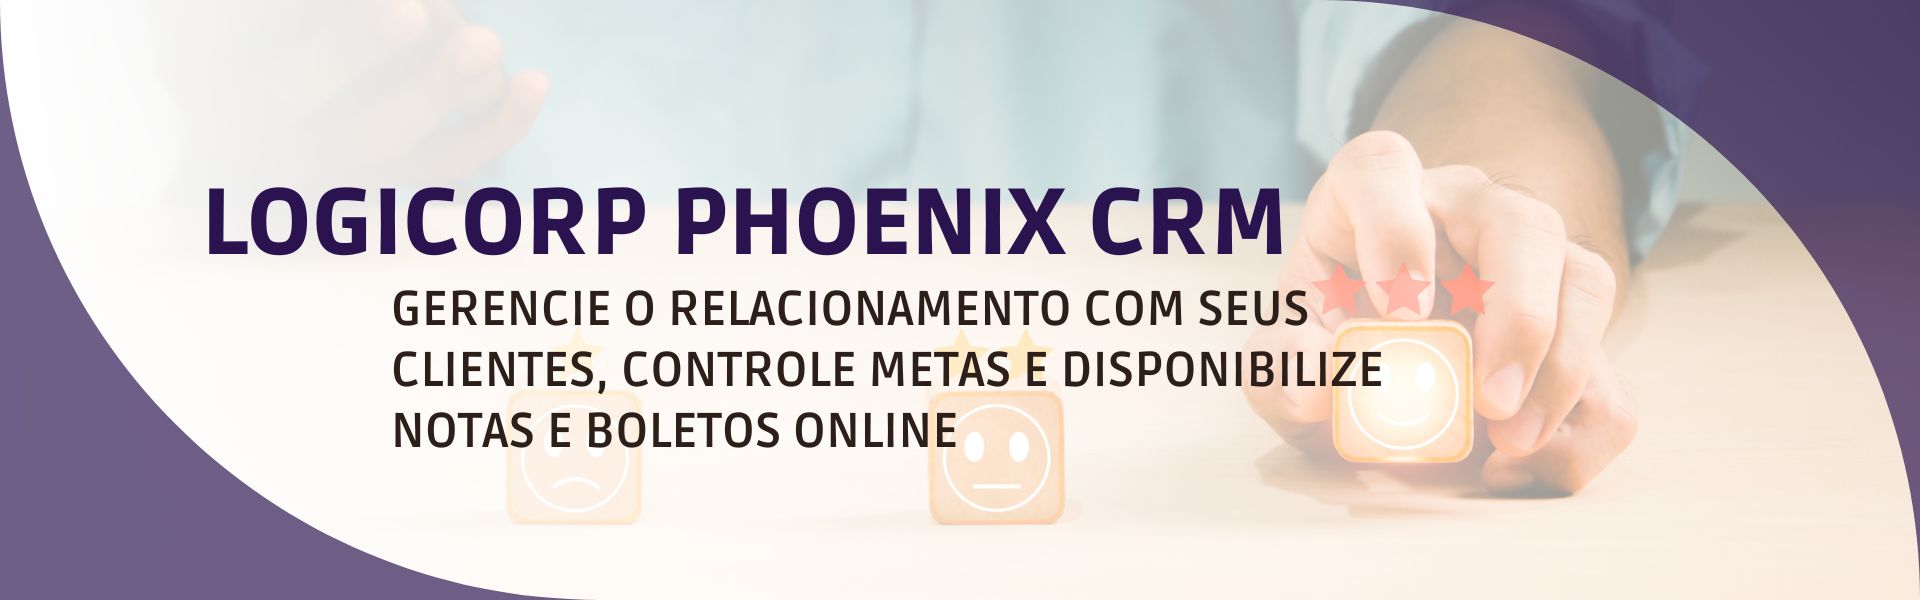 Logicorp Phoenix CRM